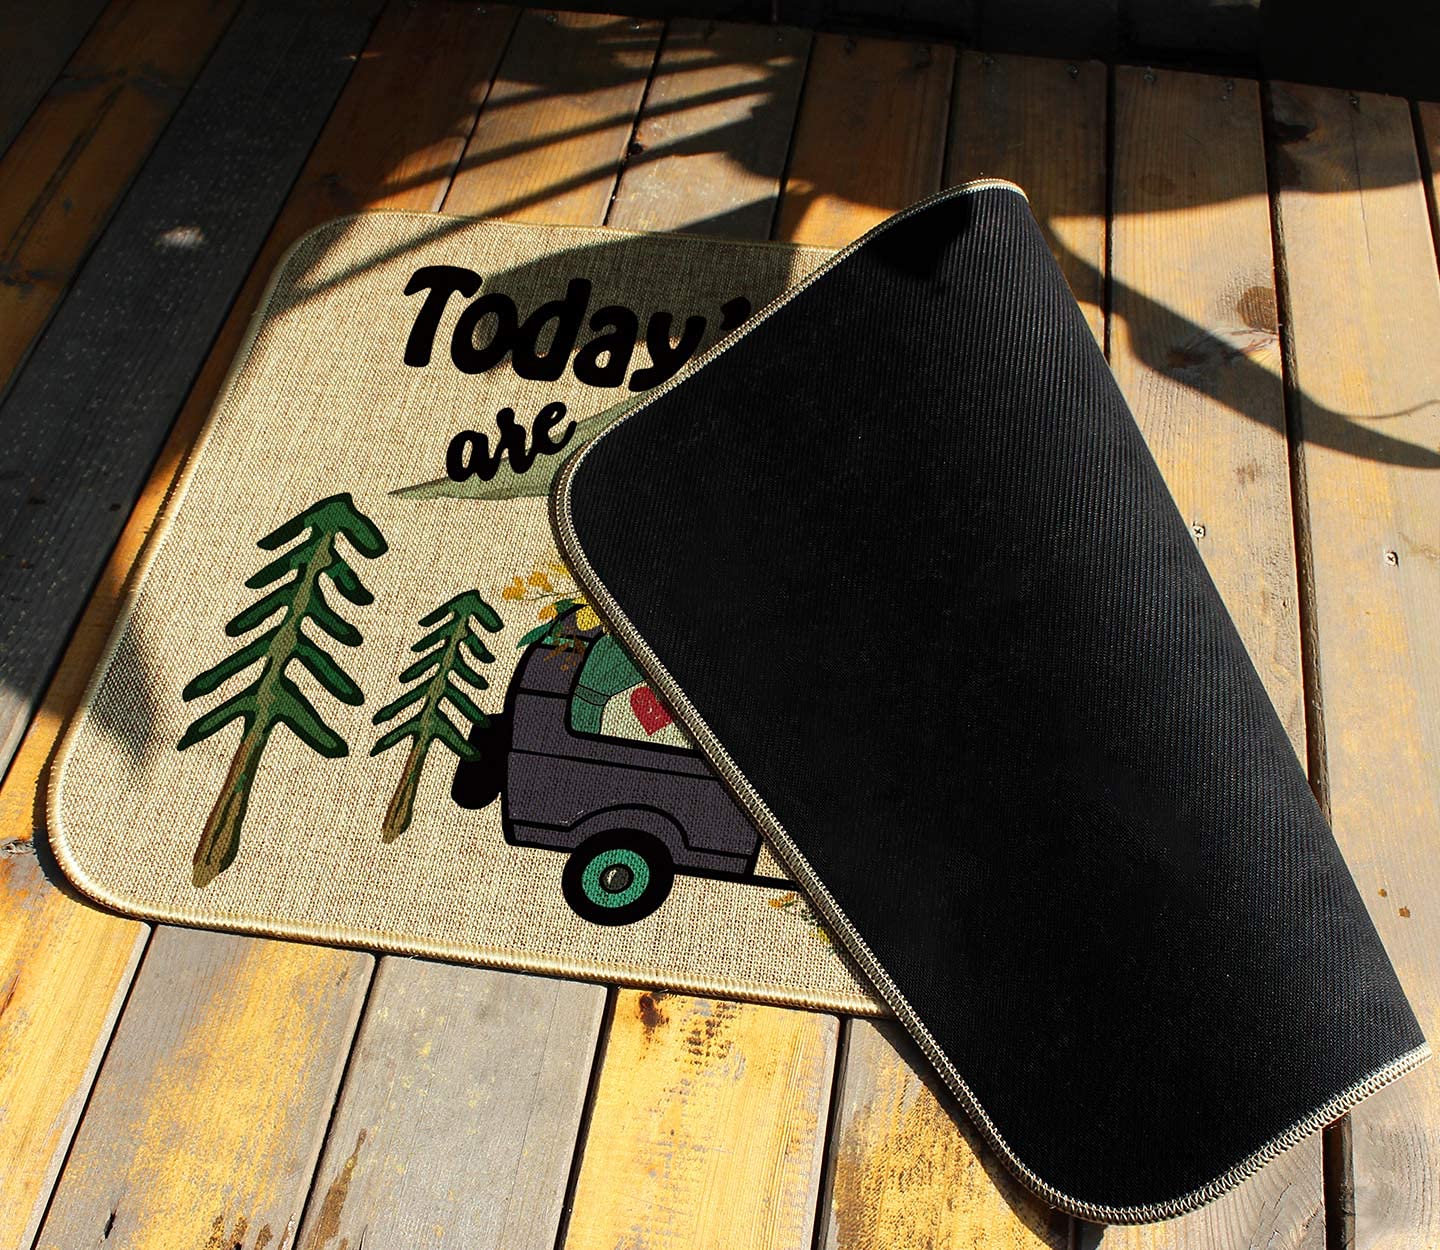 OCCdesign Burlap Camper Doormat, Camping RV Entranc Decorative Door Mat Rug -Today's Adventures